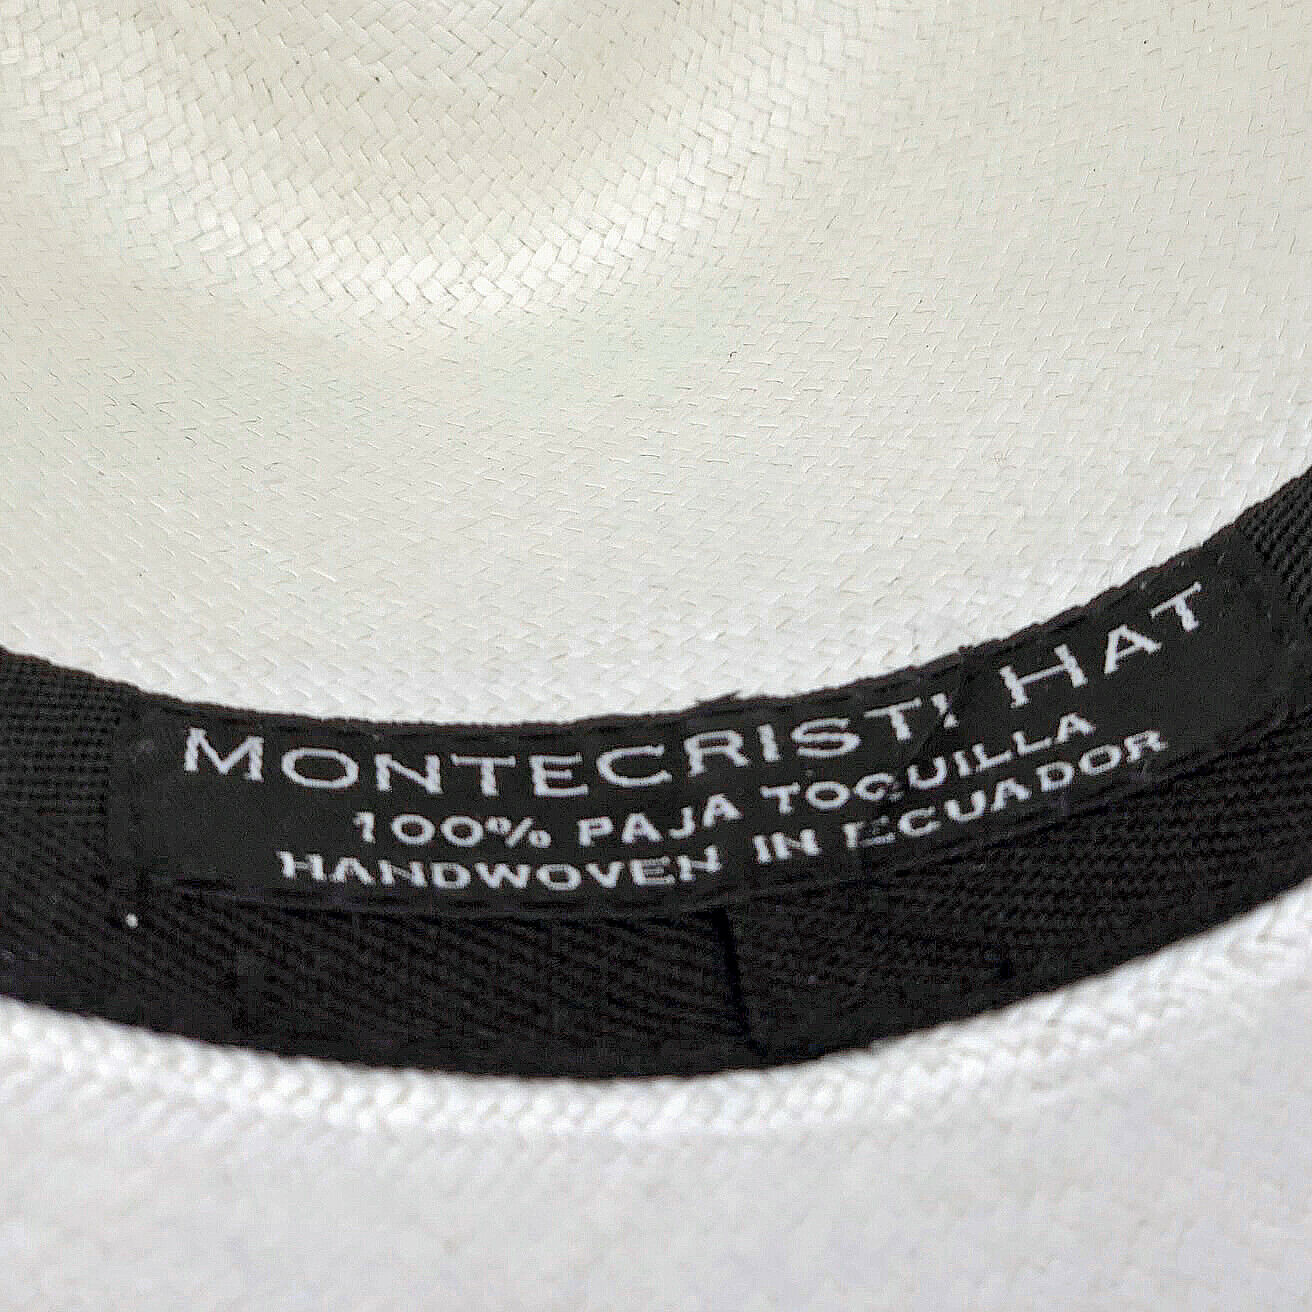 Handwoven Classic Fedora Genuine Panama Hat made in Montecristi Ecuador - White Super Fino